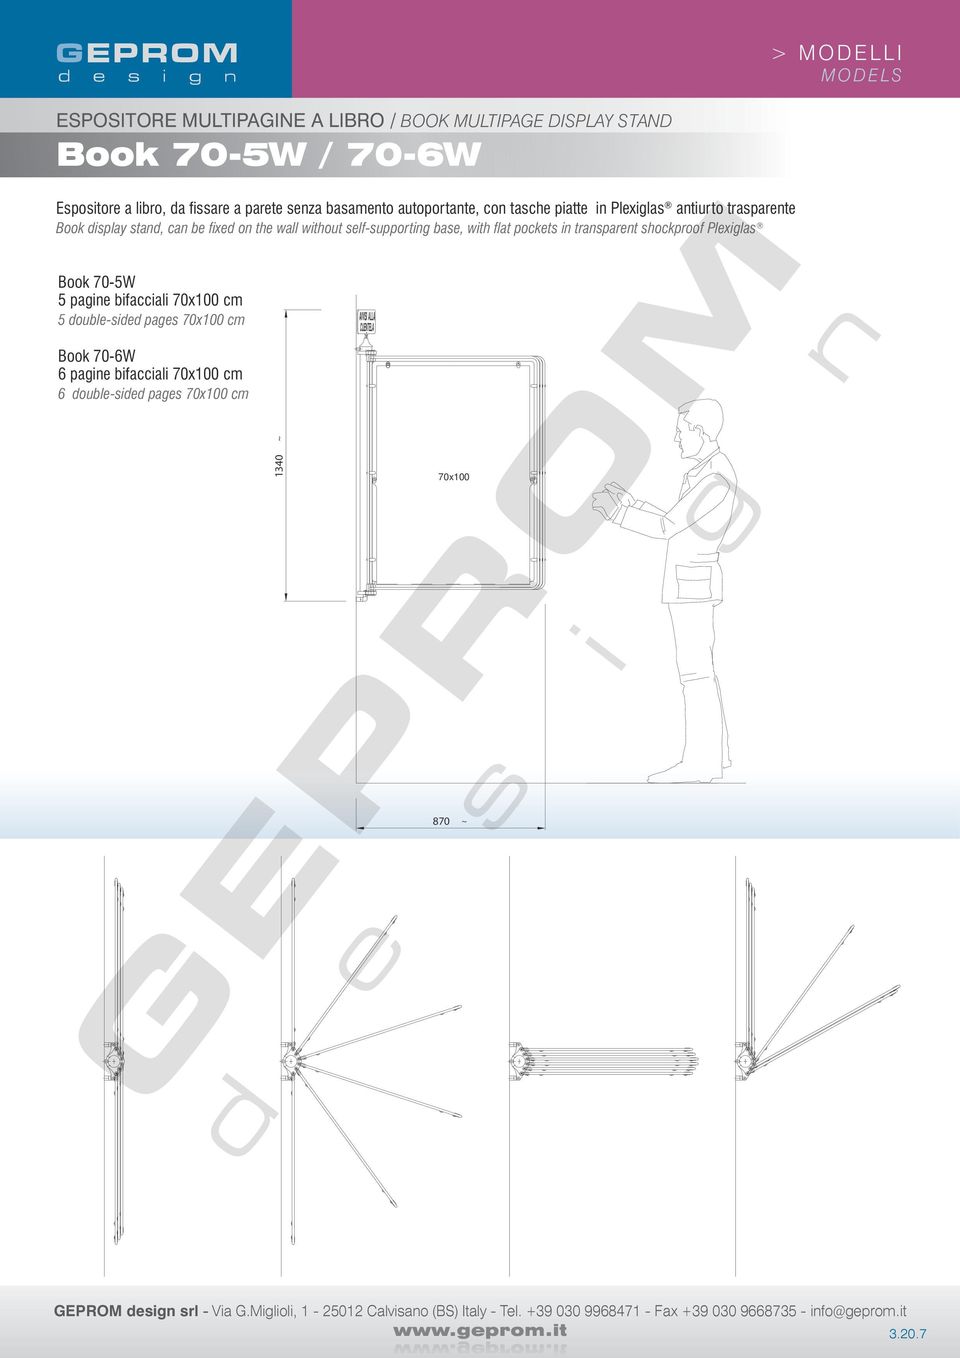 pockets in transparent shockproof Plexiglas Book 70-5W 5 pagine bifacciali 70x100 cm 5 double-sided pages 70x100 cm